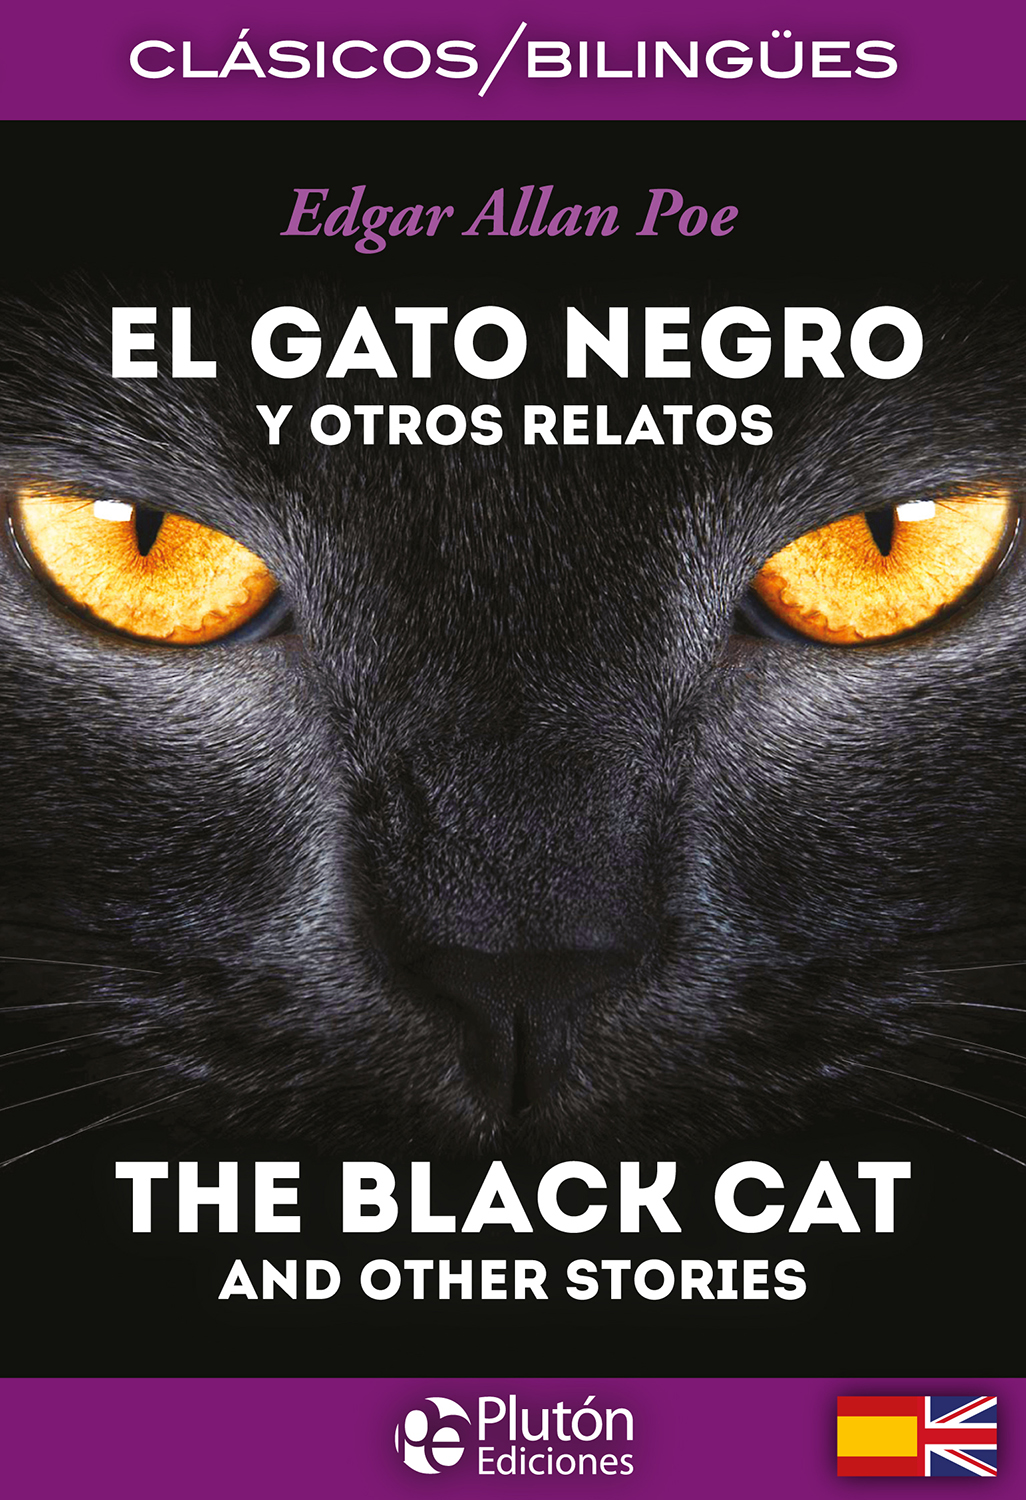 the black cat edgar allan poe story